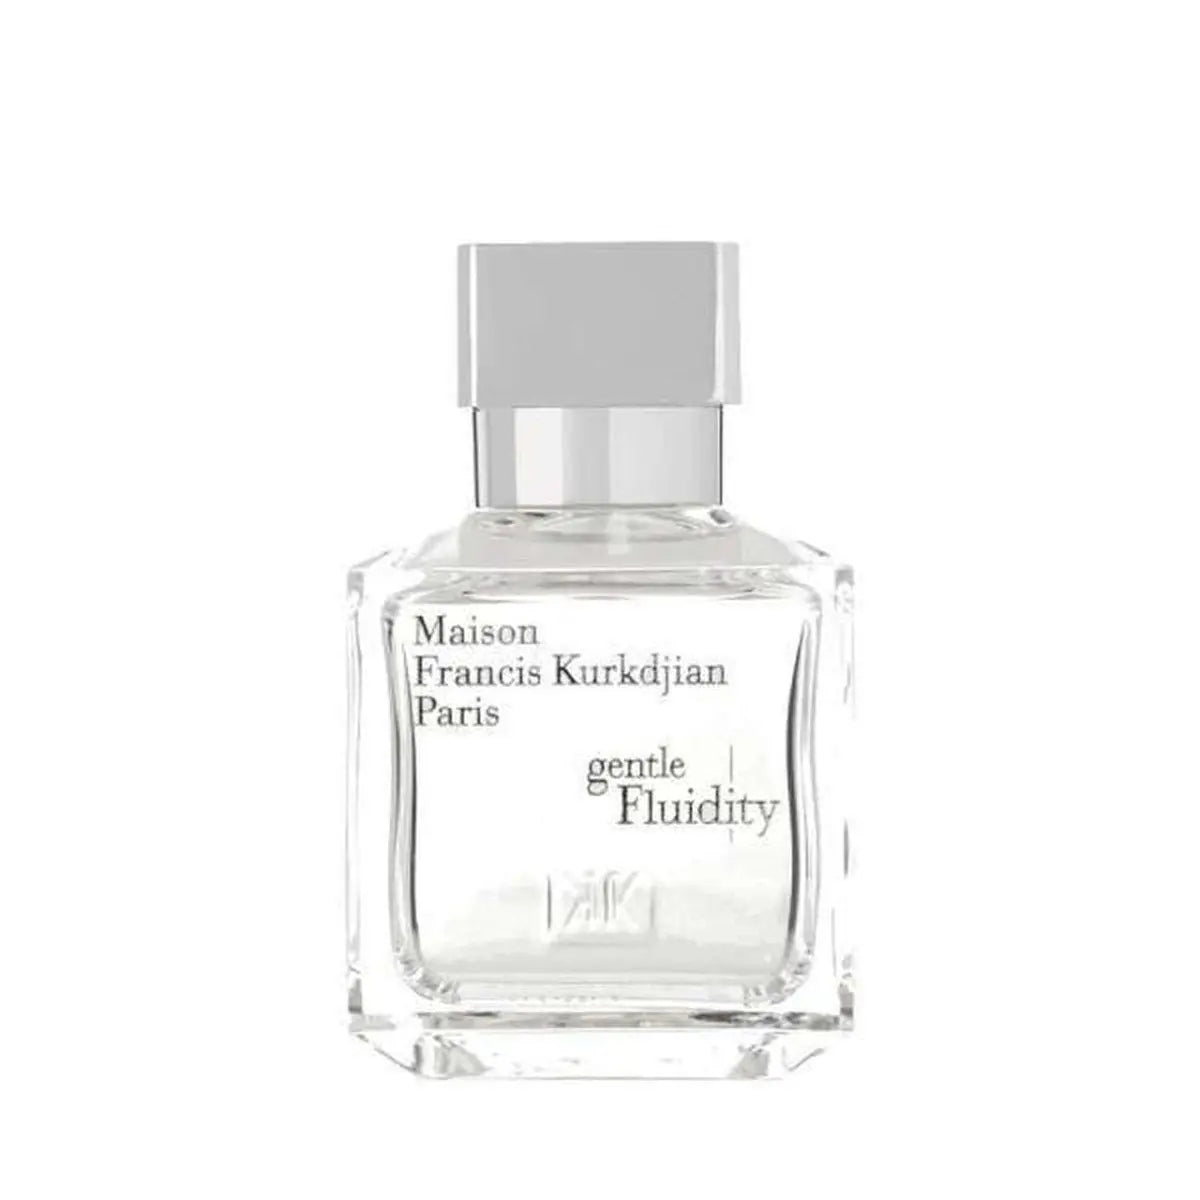 Maison francis kurkdjian 温和流动银香水 70ml 无膜促销